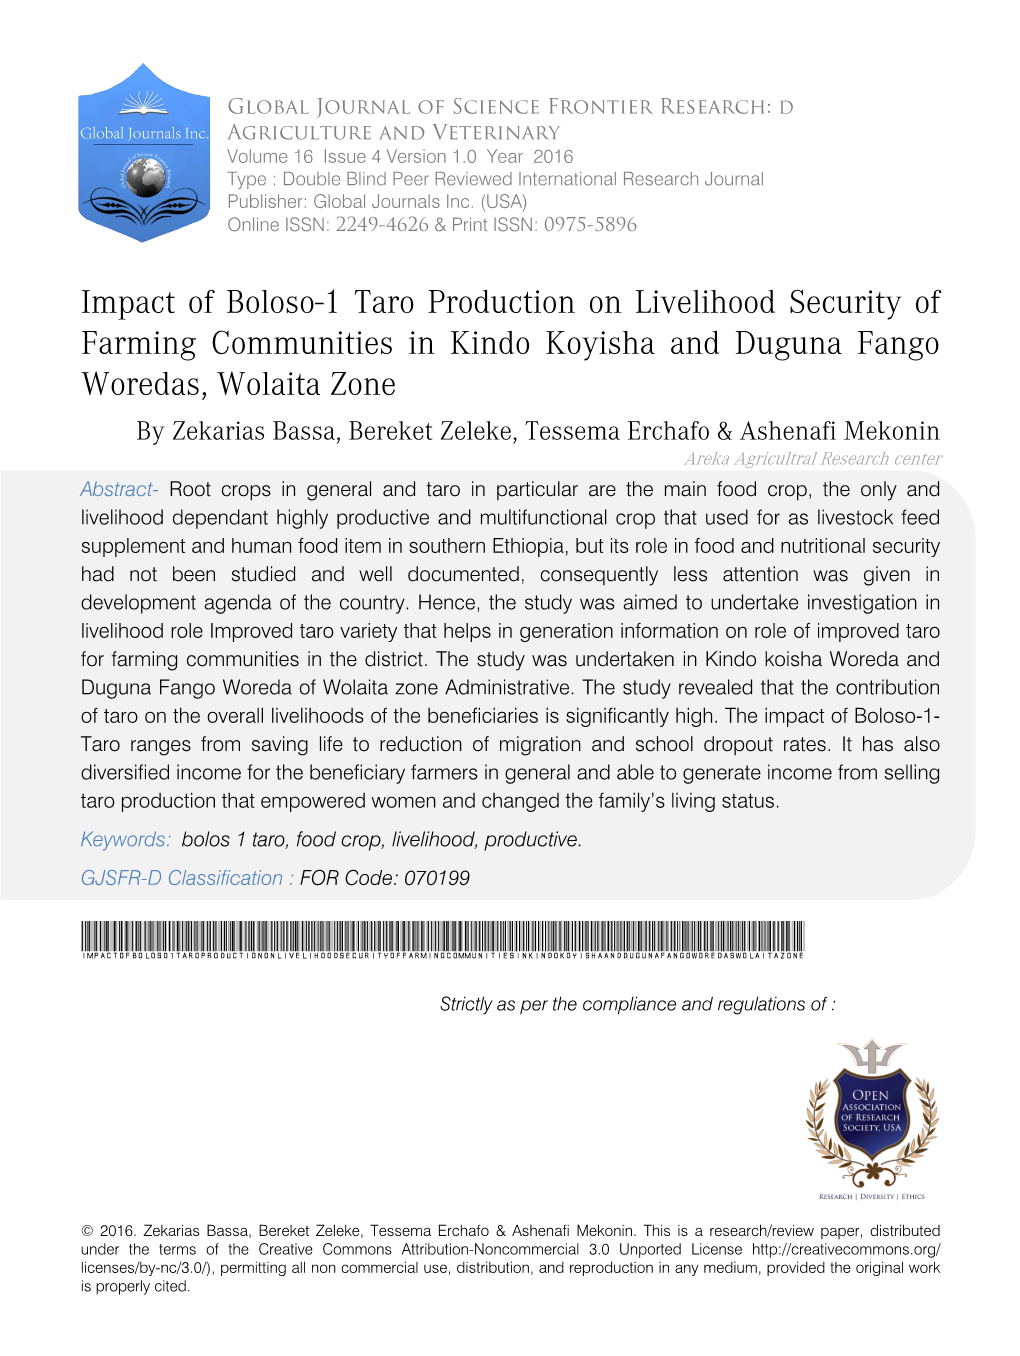 Impact of Boloso-1 Taro Production on Livelihood Security of Farming Communities in Kindo Koyisha and Duguna Fango Woredas, Wola